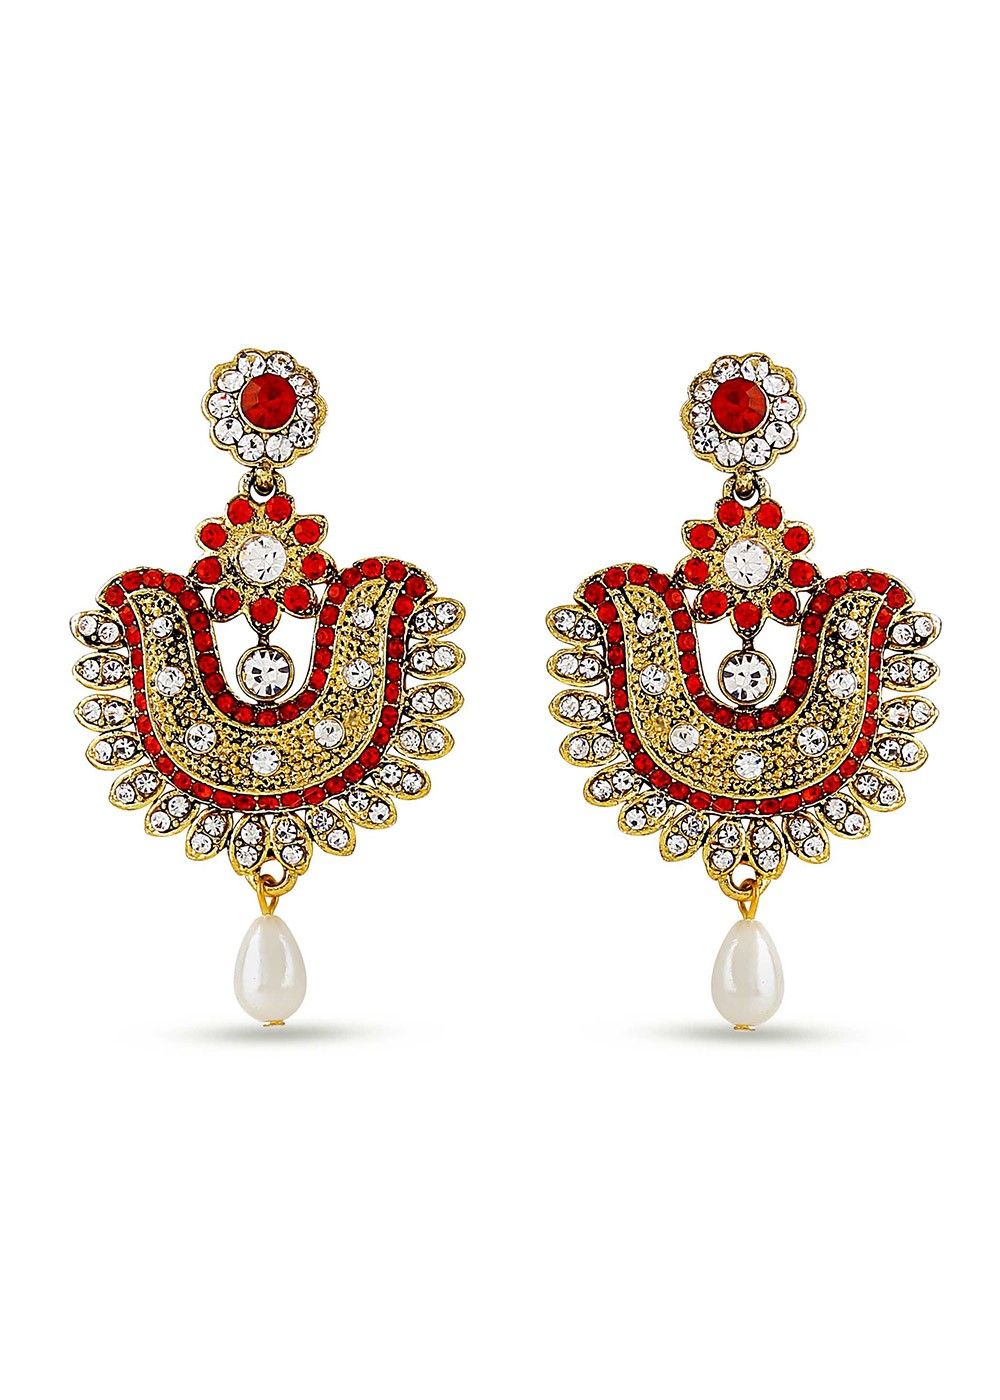 Buy Golden Earrings Pompoms Imitation Red Fur Online in India  Etsy